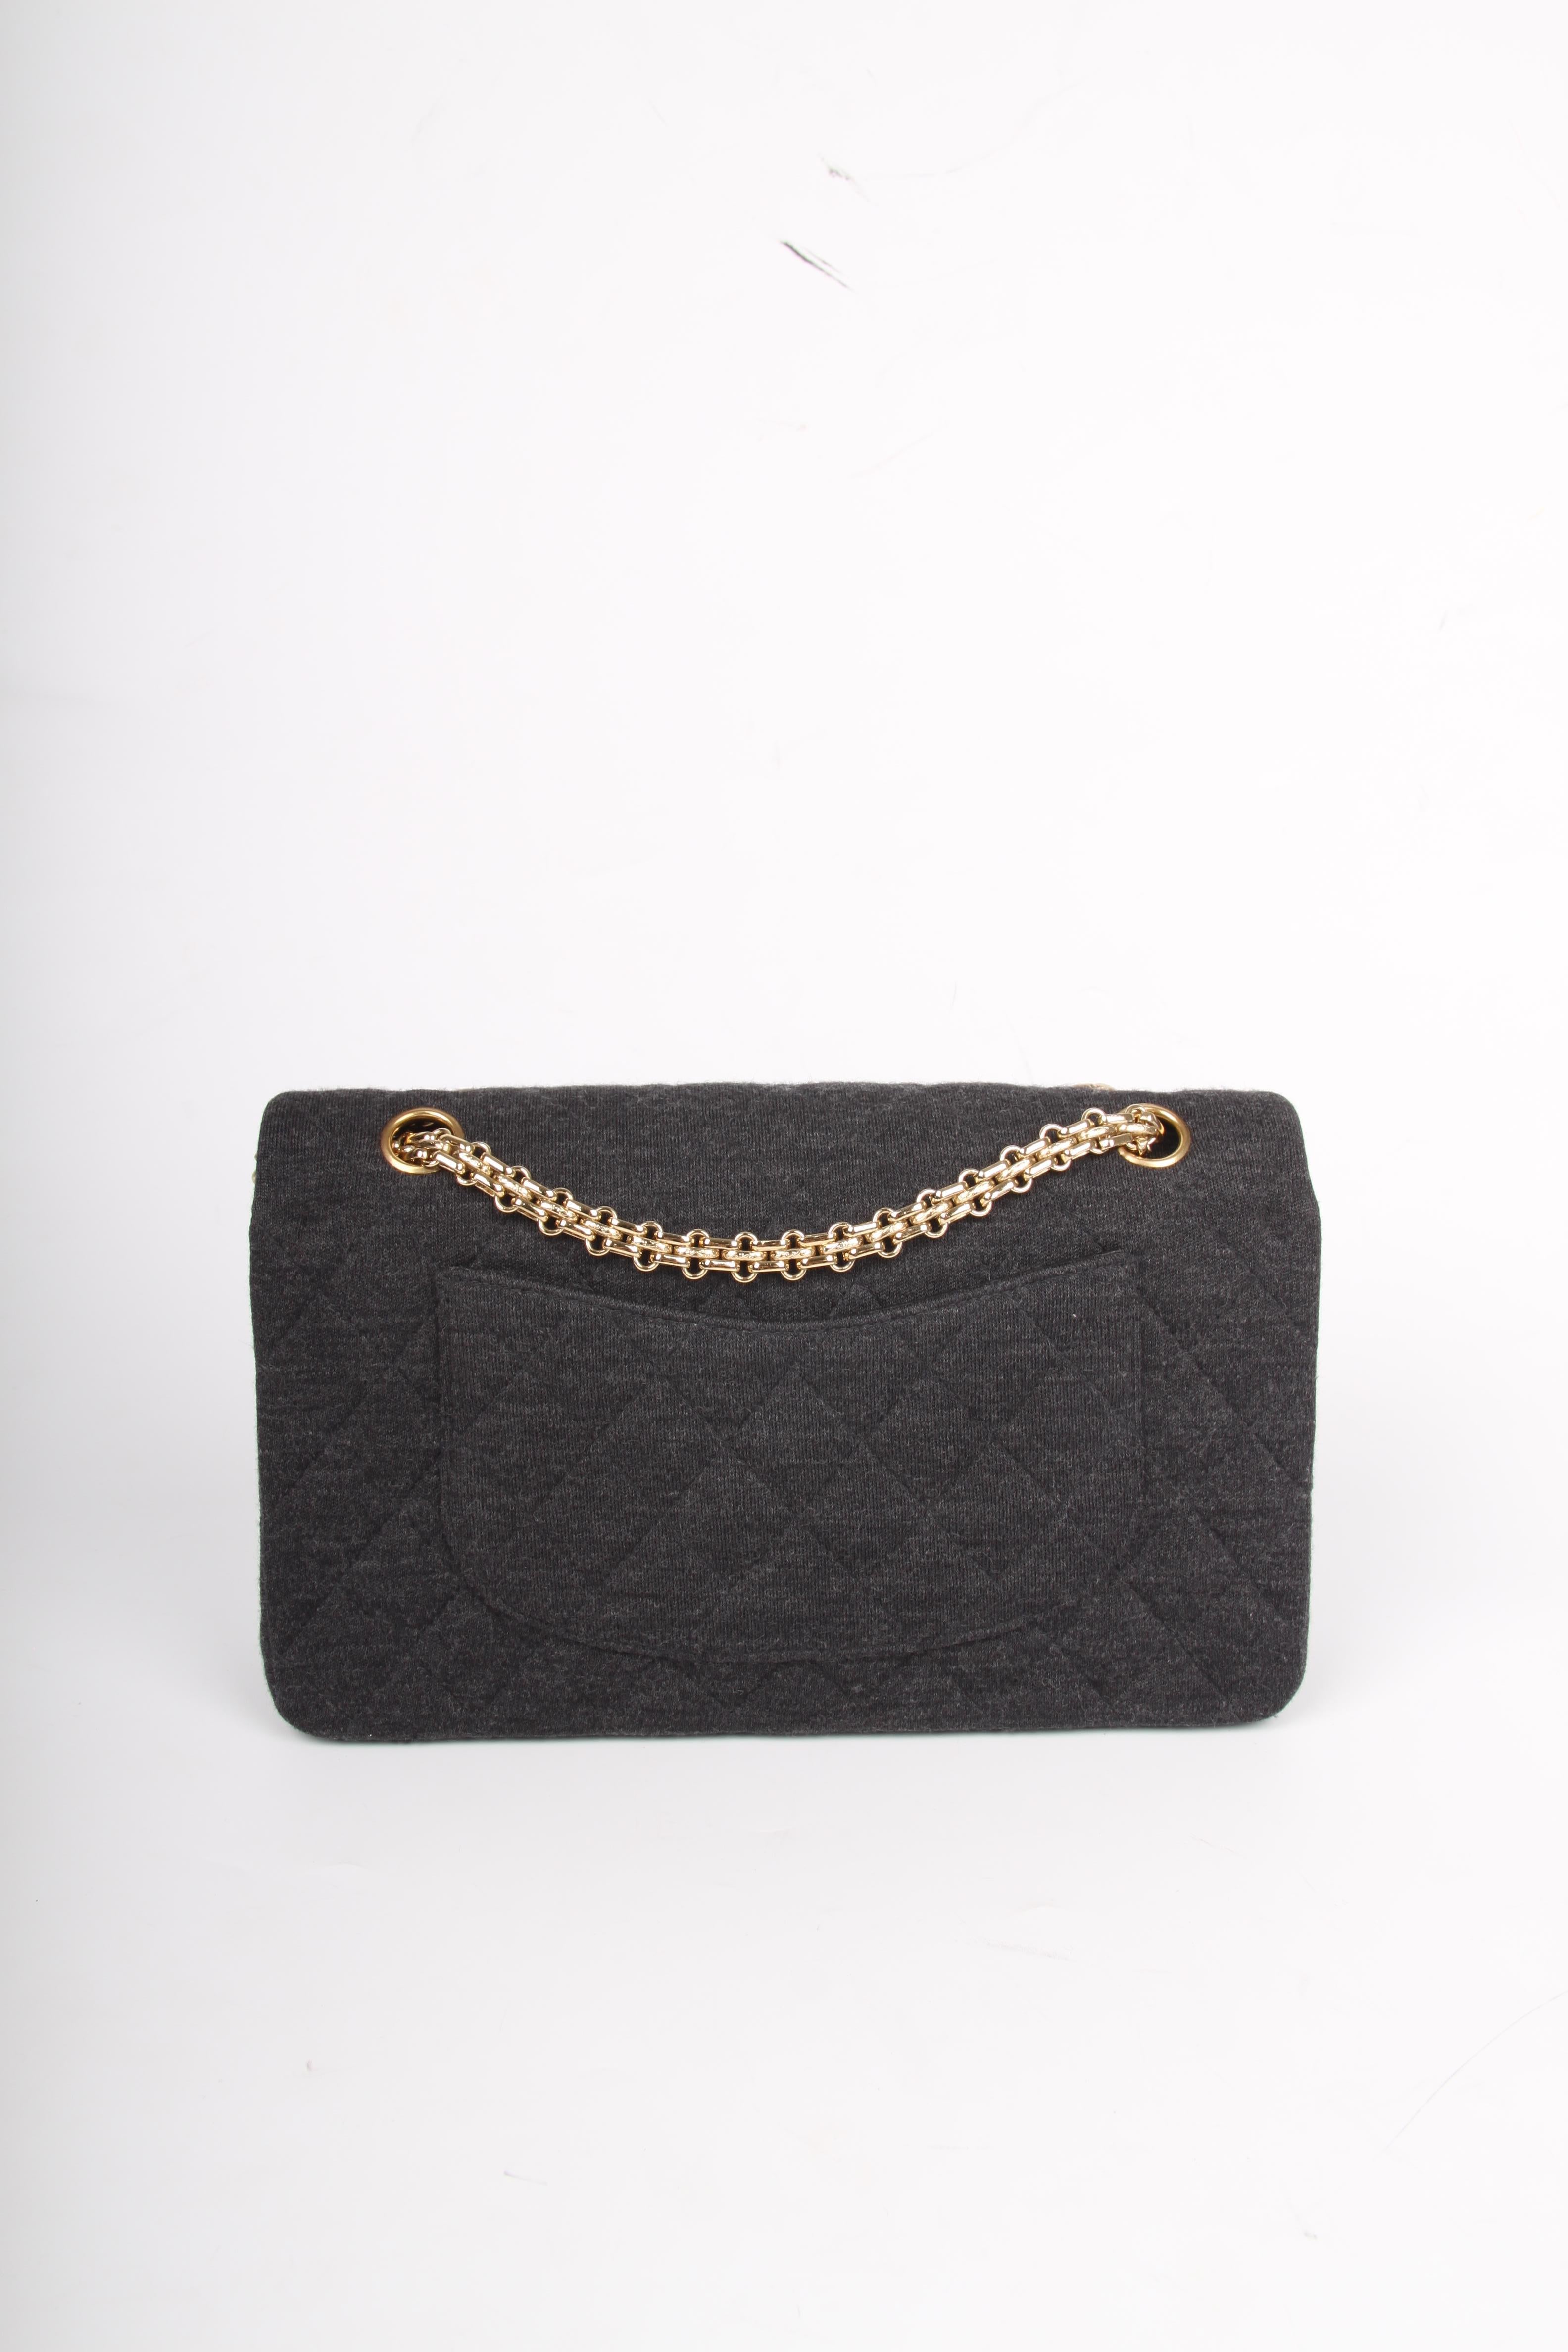 Chanel 2.55 Reissue Medium Double Flap Bag Jersey - dark grey 1